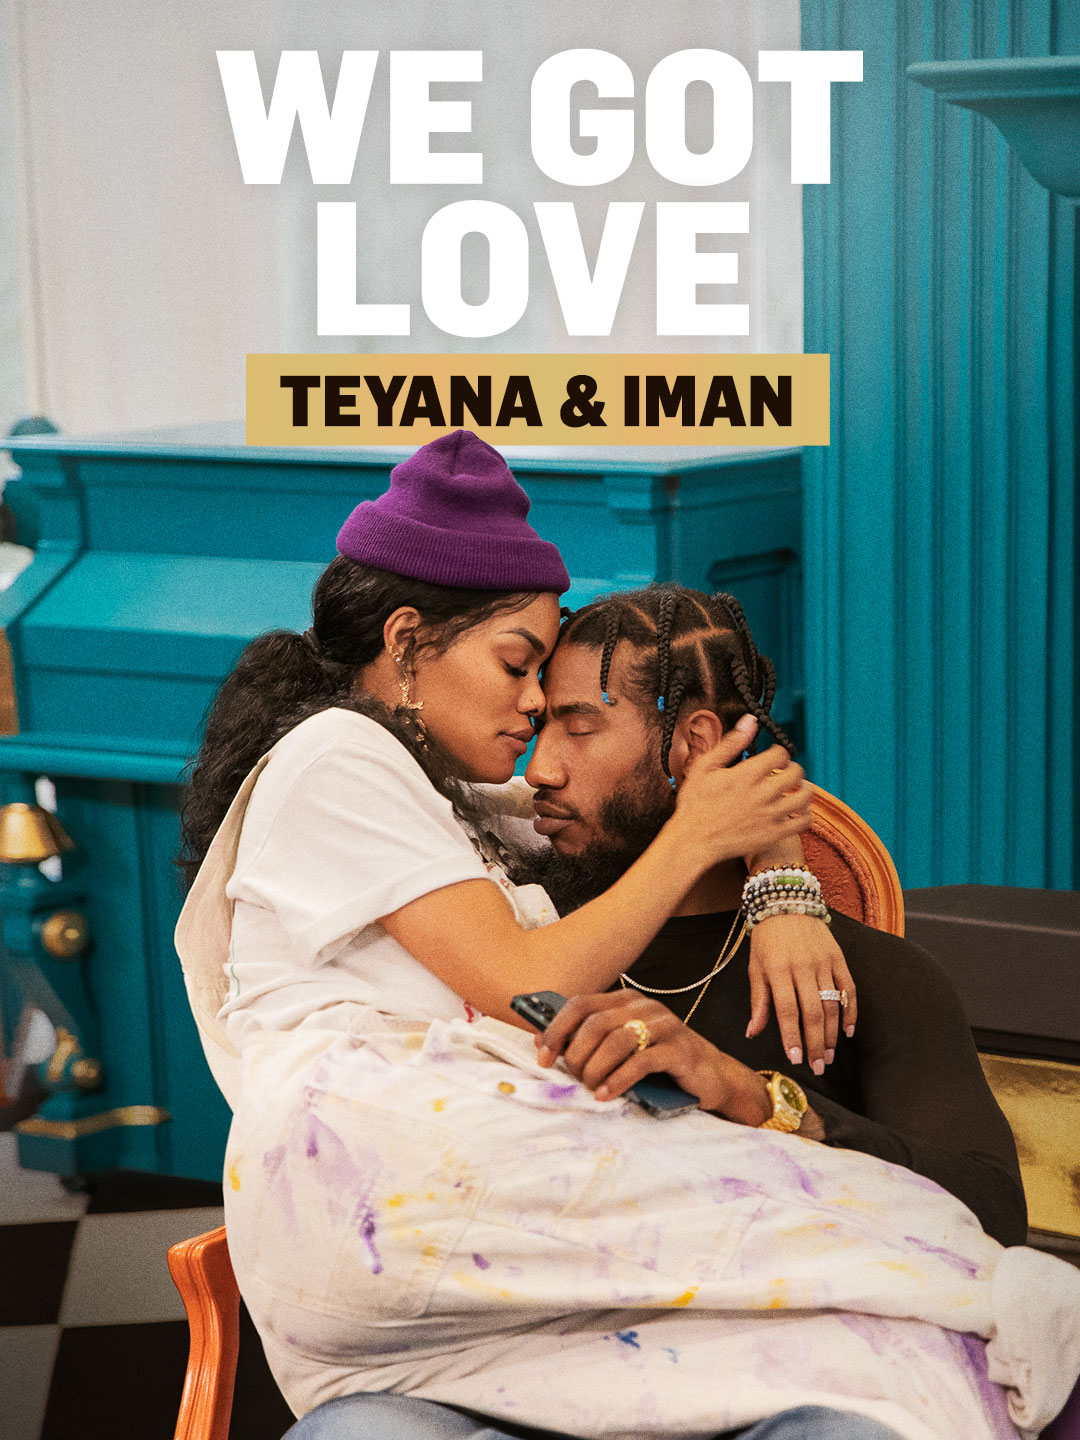 We Got Love Teyana & Iman: Where to Watch the New E! Docuseries